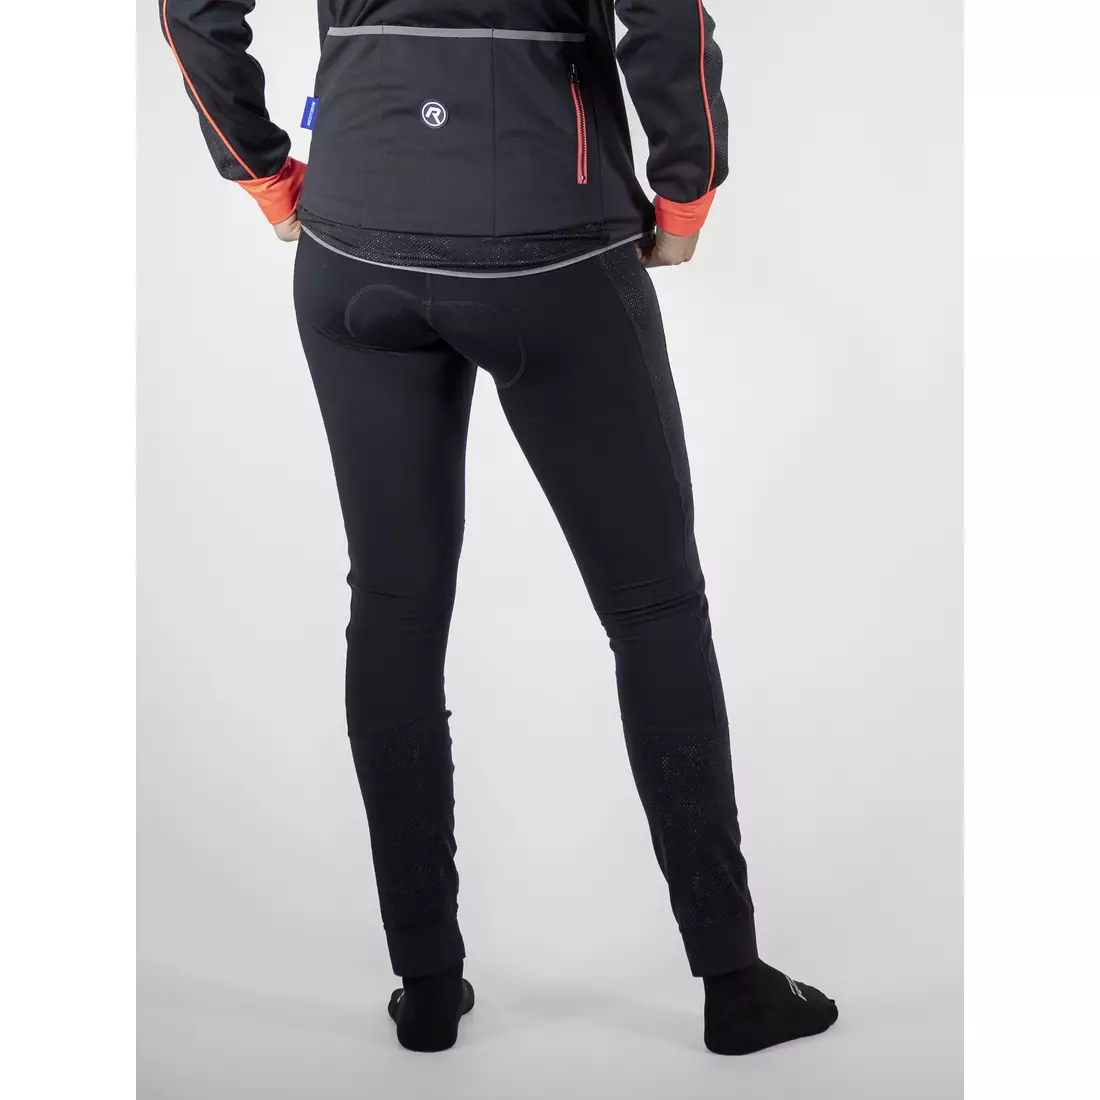 ROGELLI VENOSA women's cycling pants, insulated, black